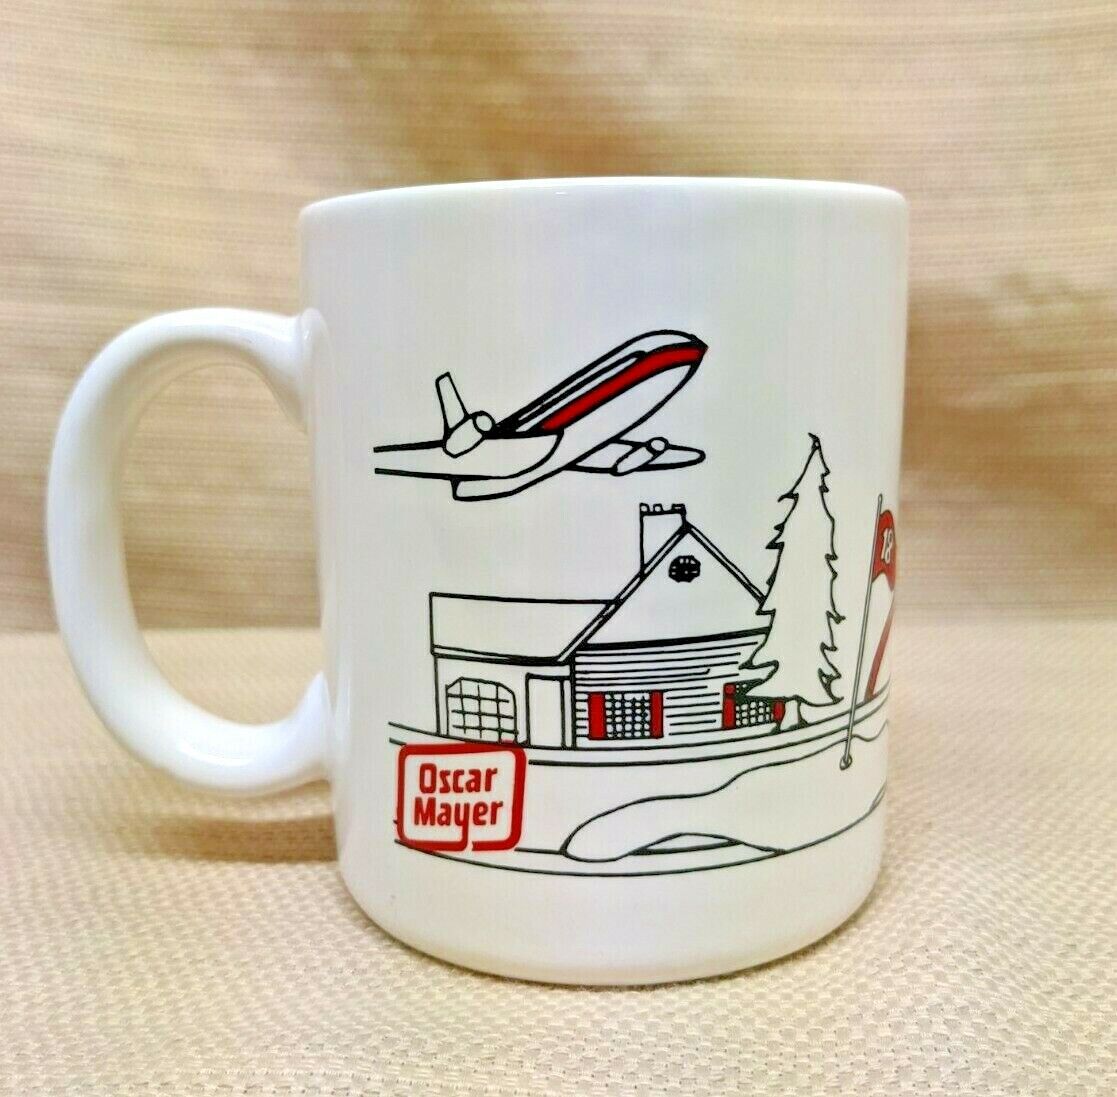 Vintage 1987 Oscar Mayer The Magic Years Retirement Gift Coffee Mug Cup